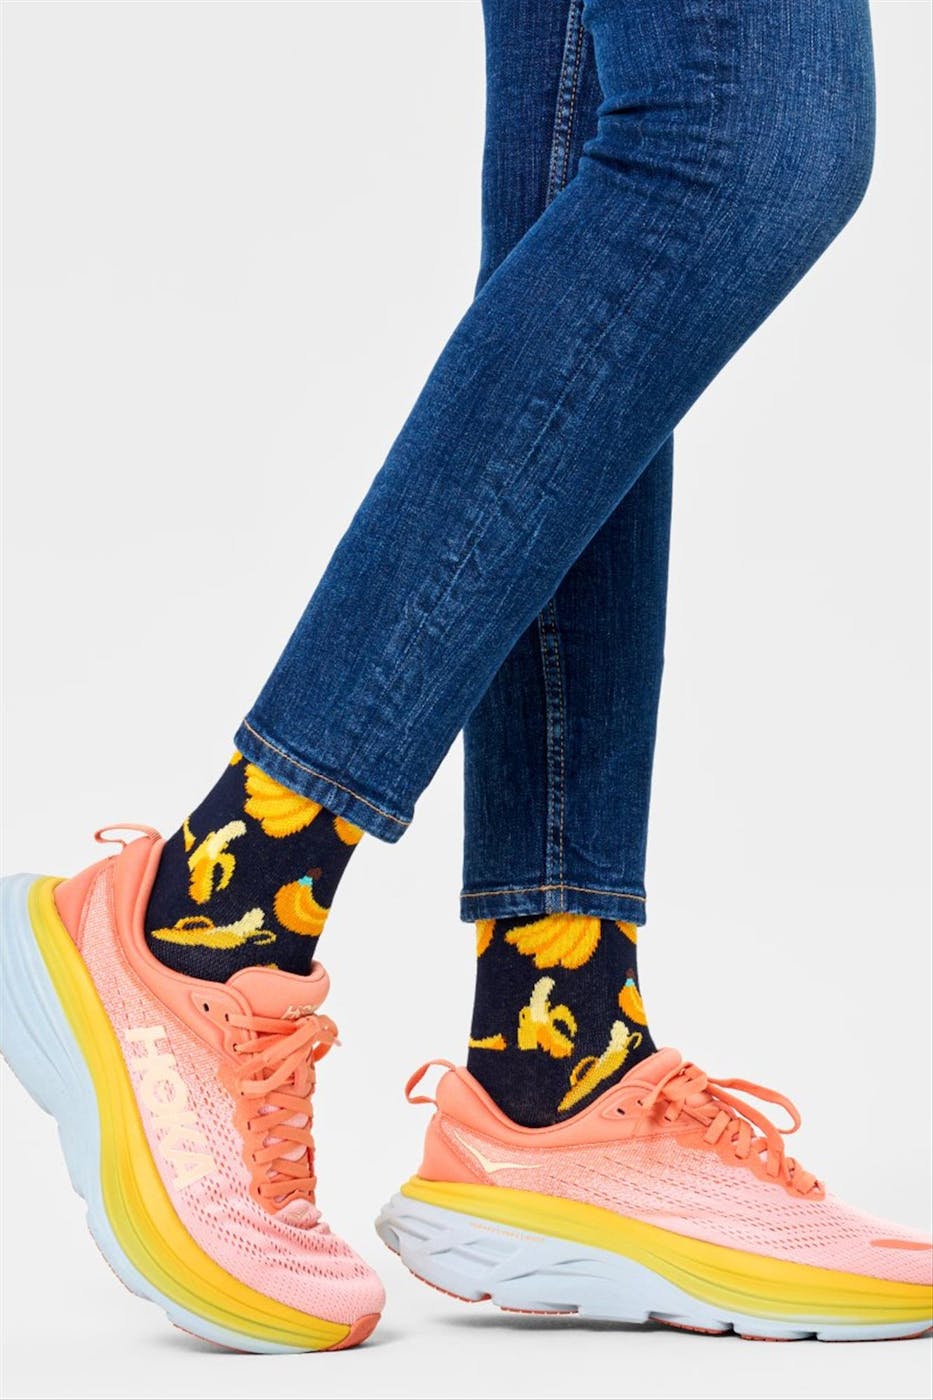 Happy Socks - Donkerblauw-gele Banana sokken, maat: 41-46